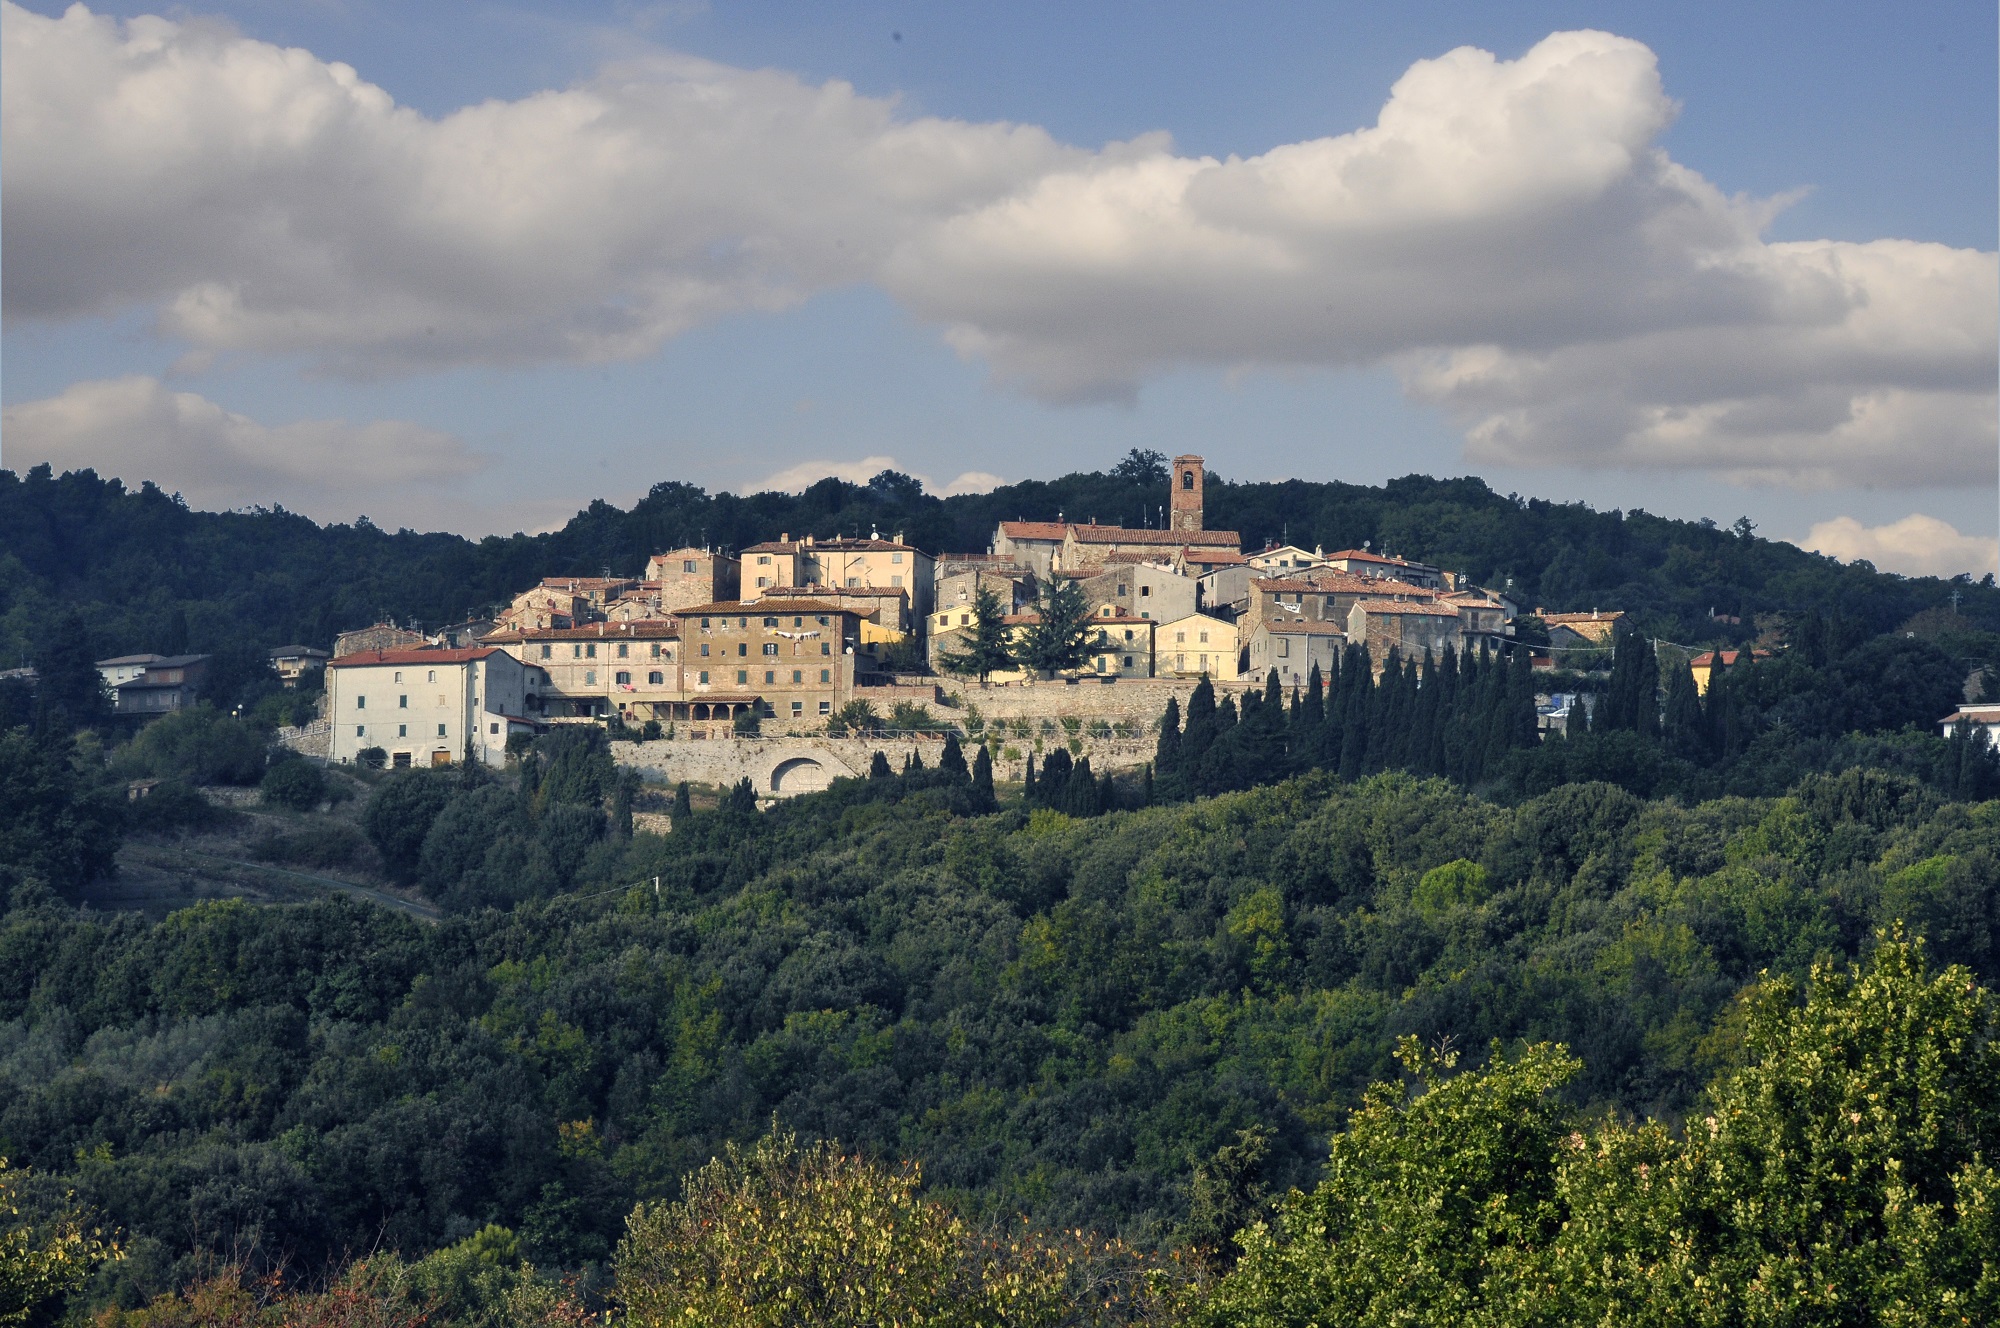 Village of Monteverdi Marittimo